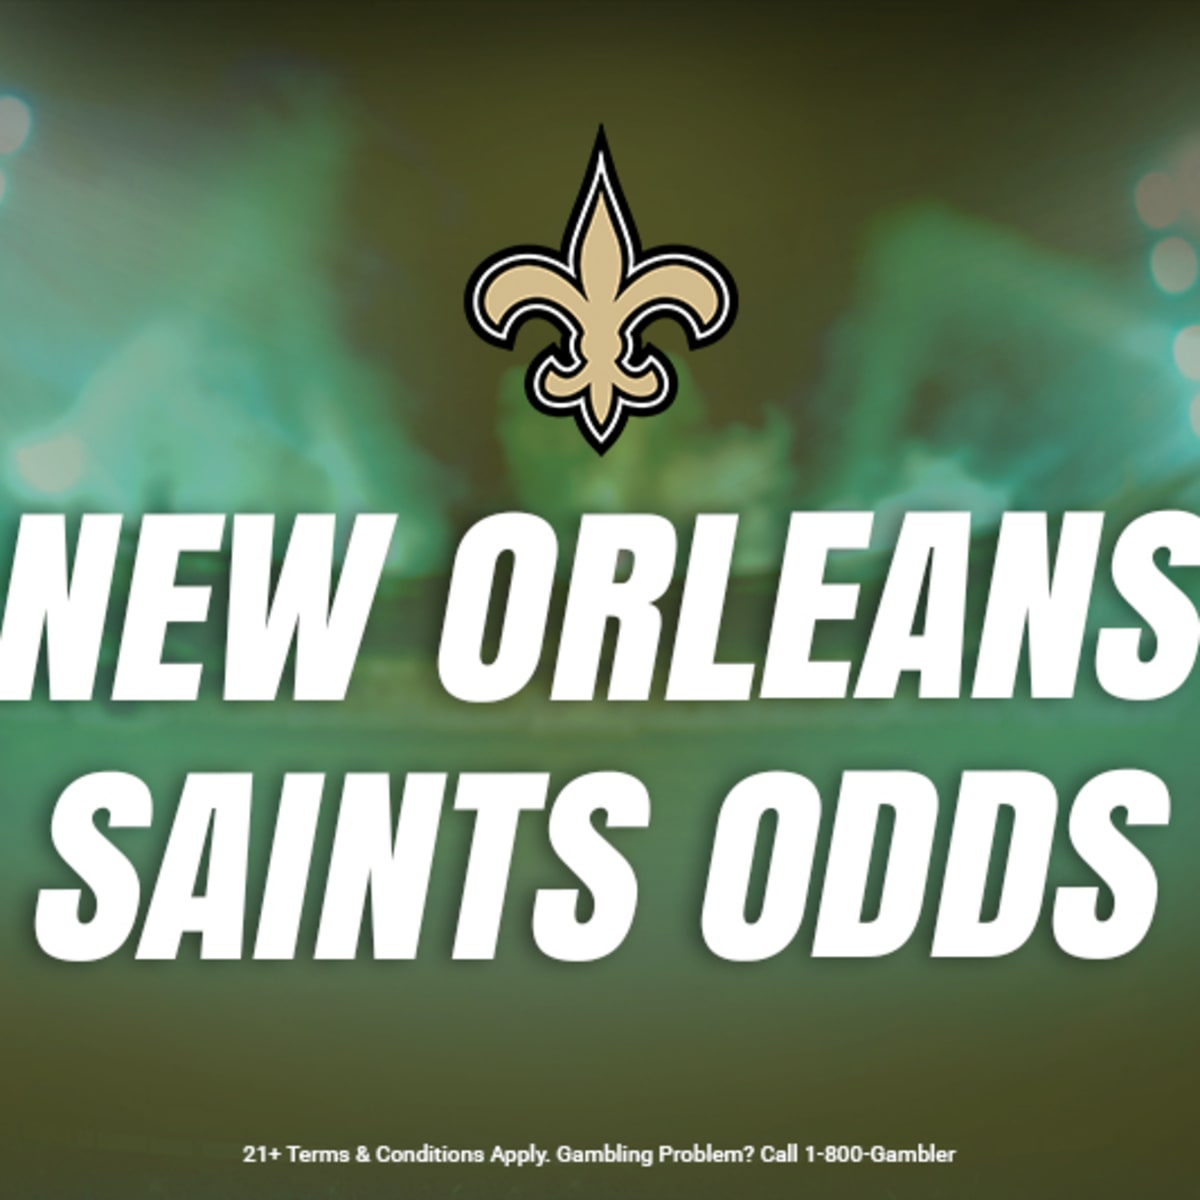 Saints NFL Betting Odds  Super Bowl, Playoffs & More - Sports